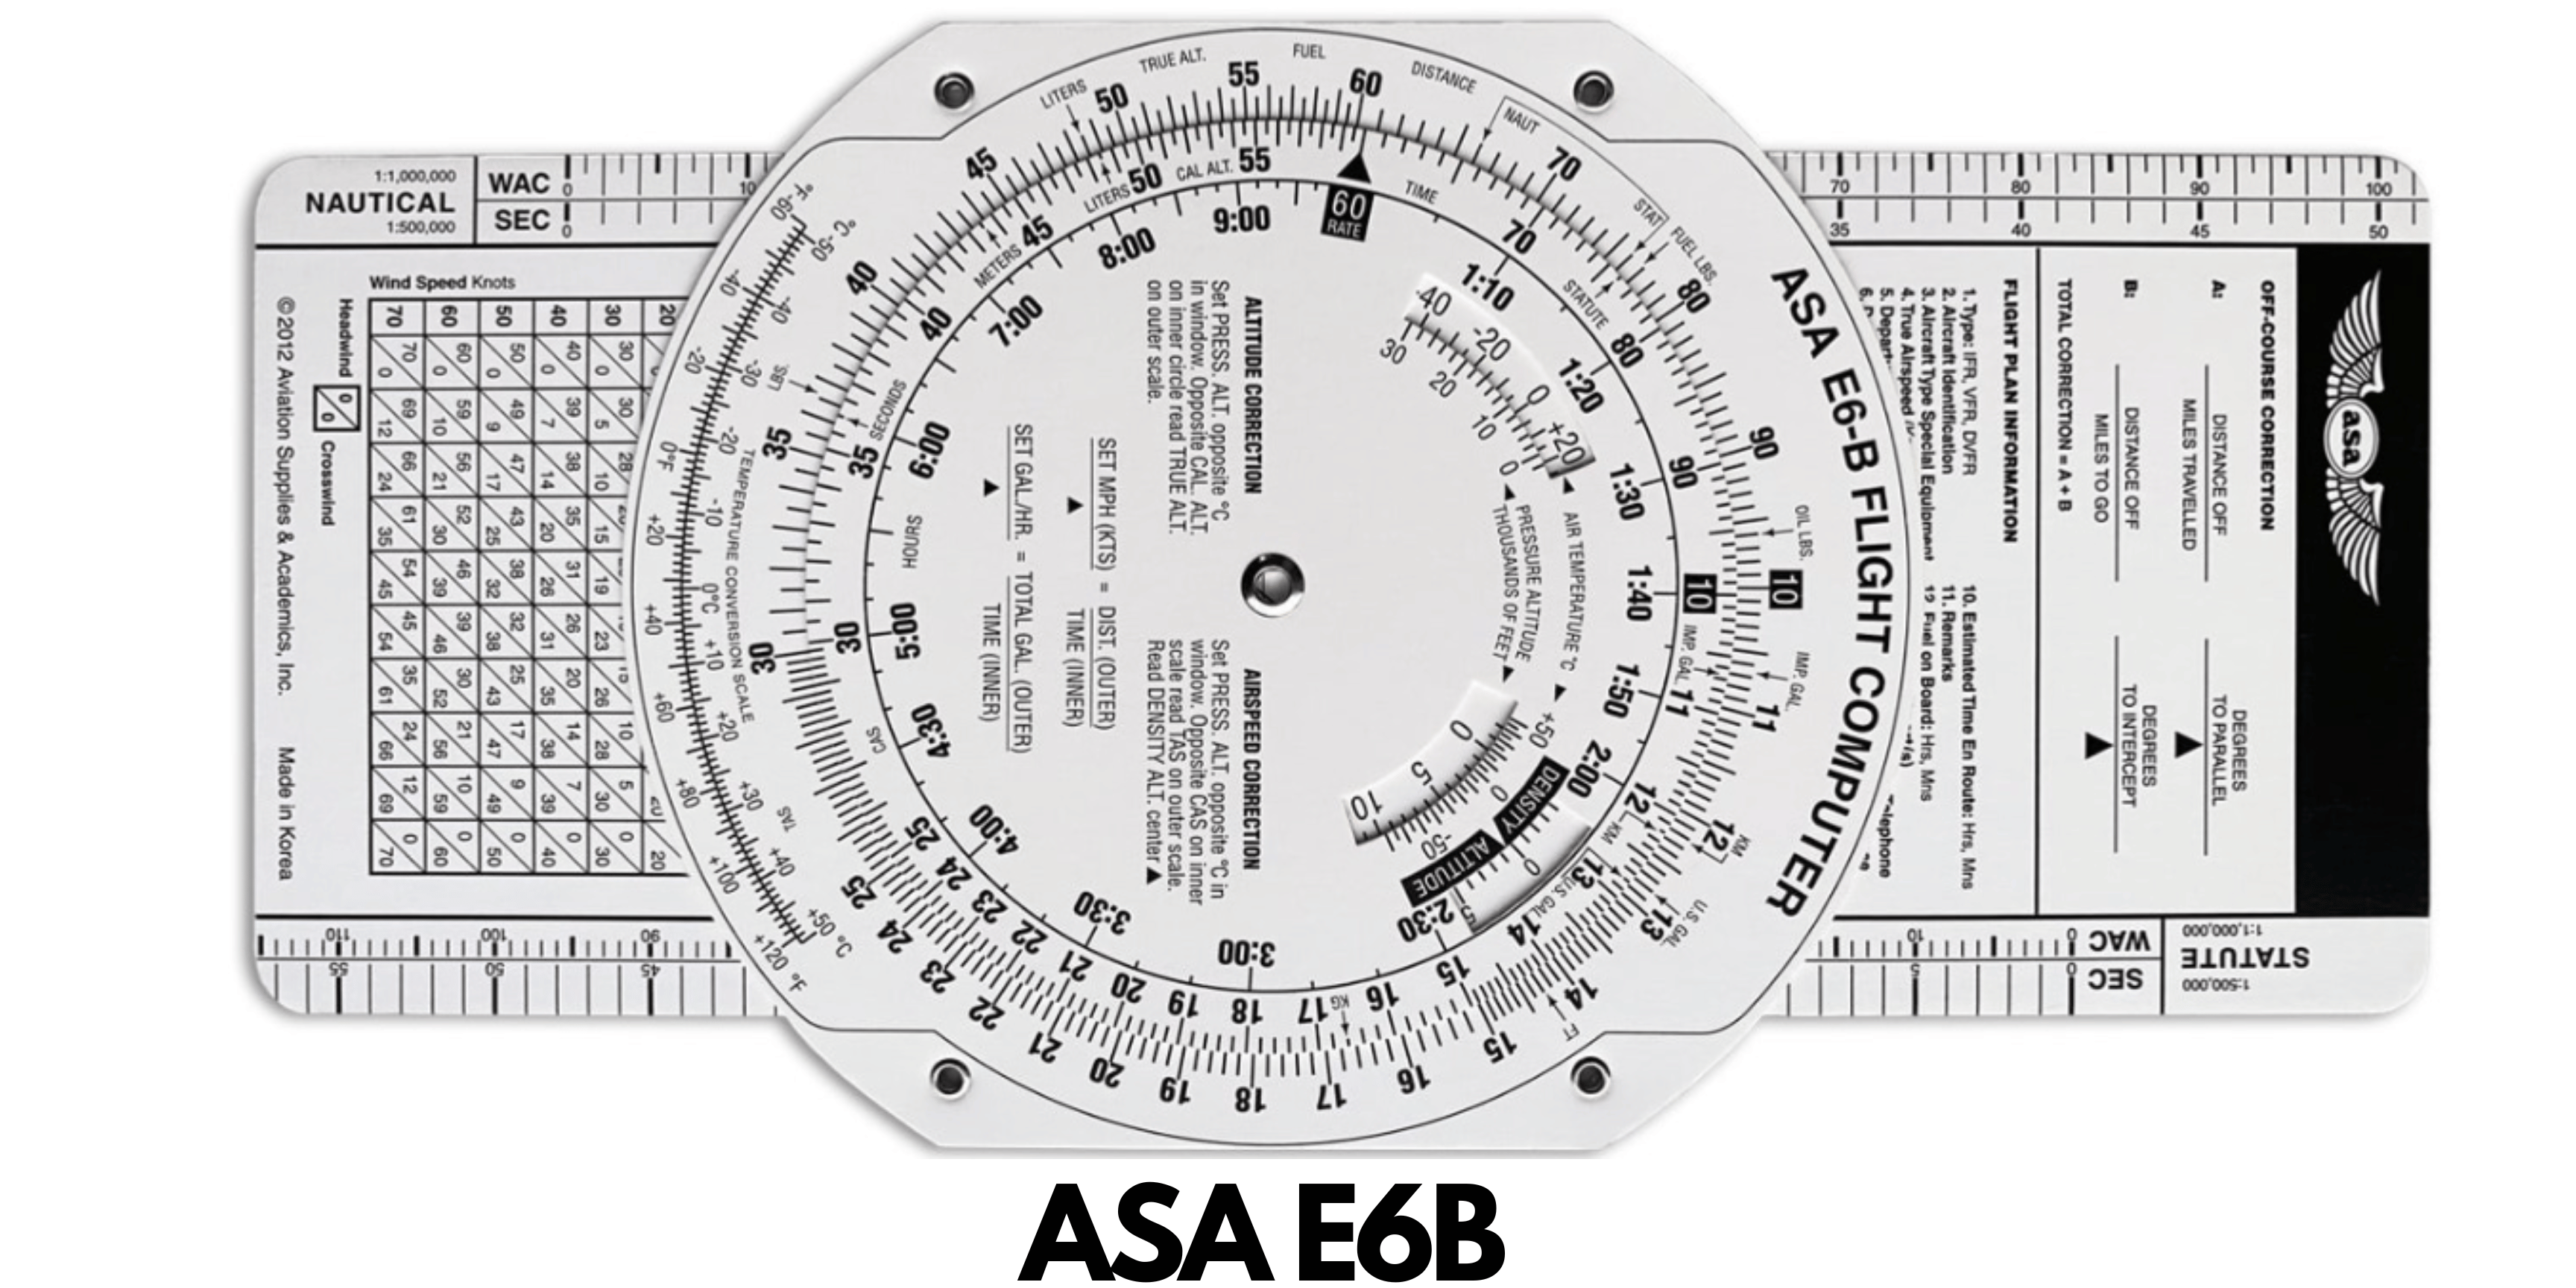 A computer side of ASA e6b flight computer 